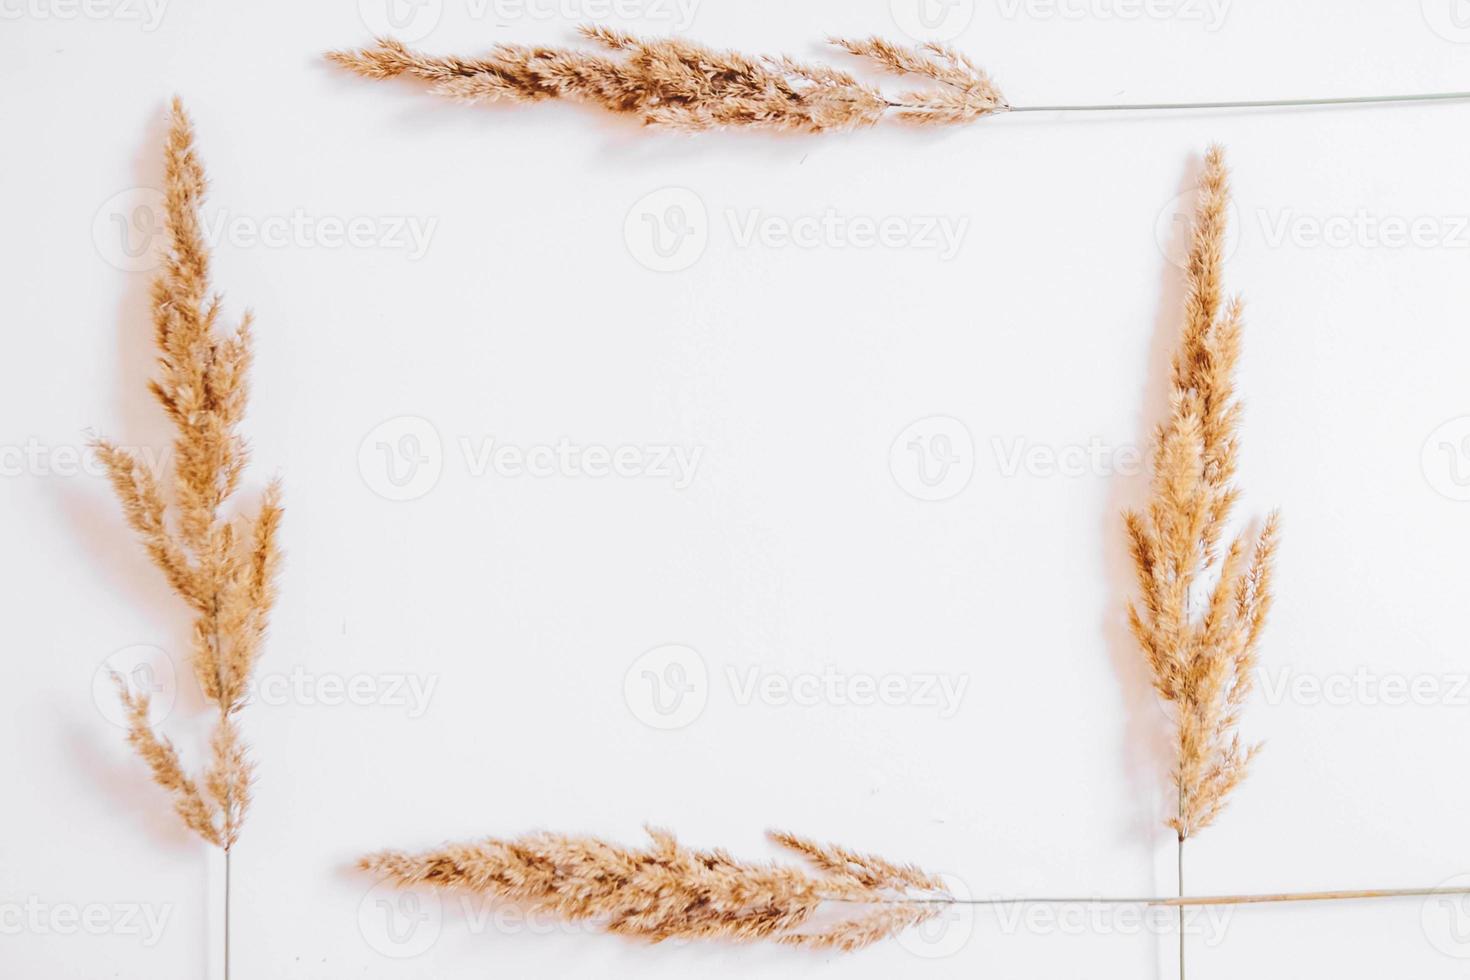 pasto seco sobre un fondo blanco foto